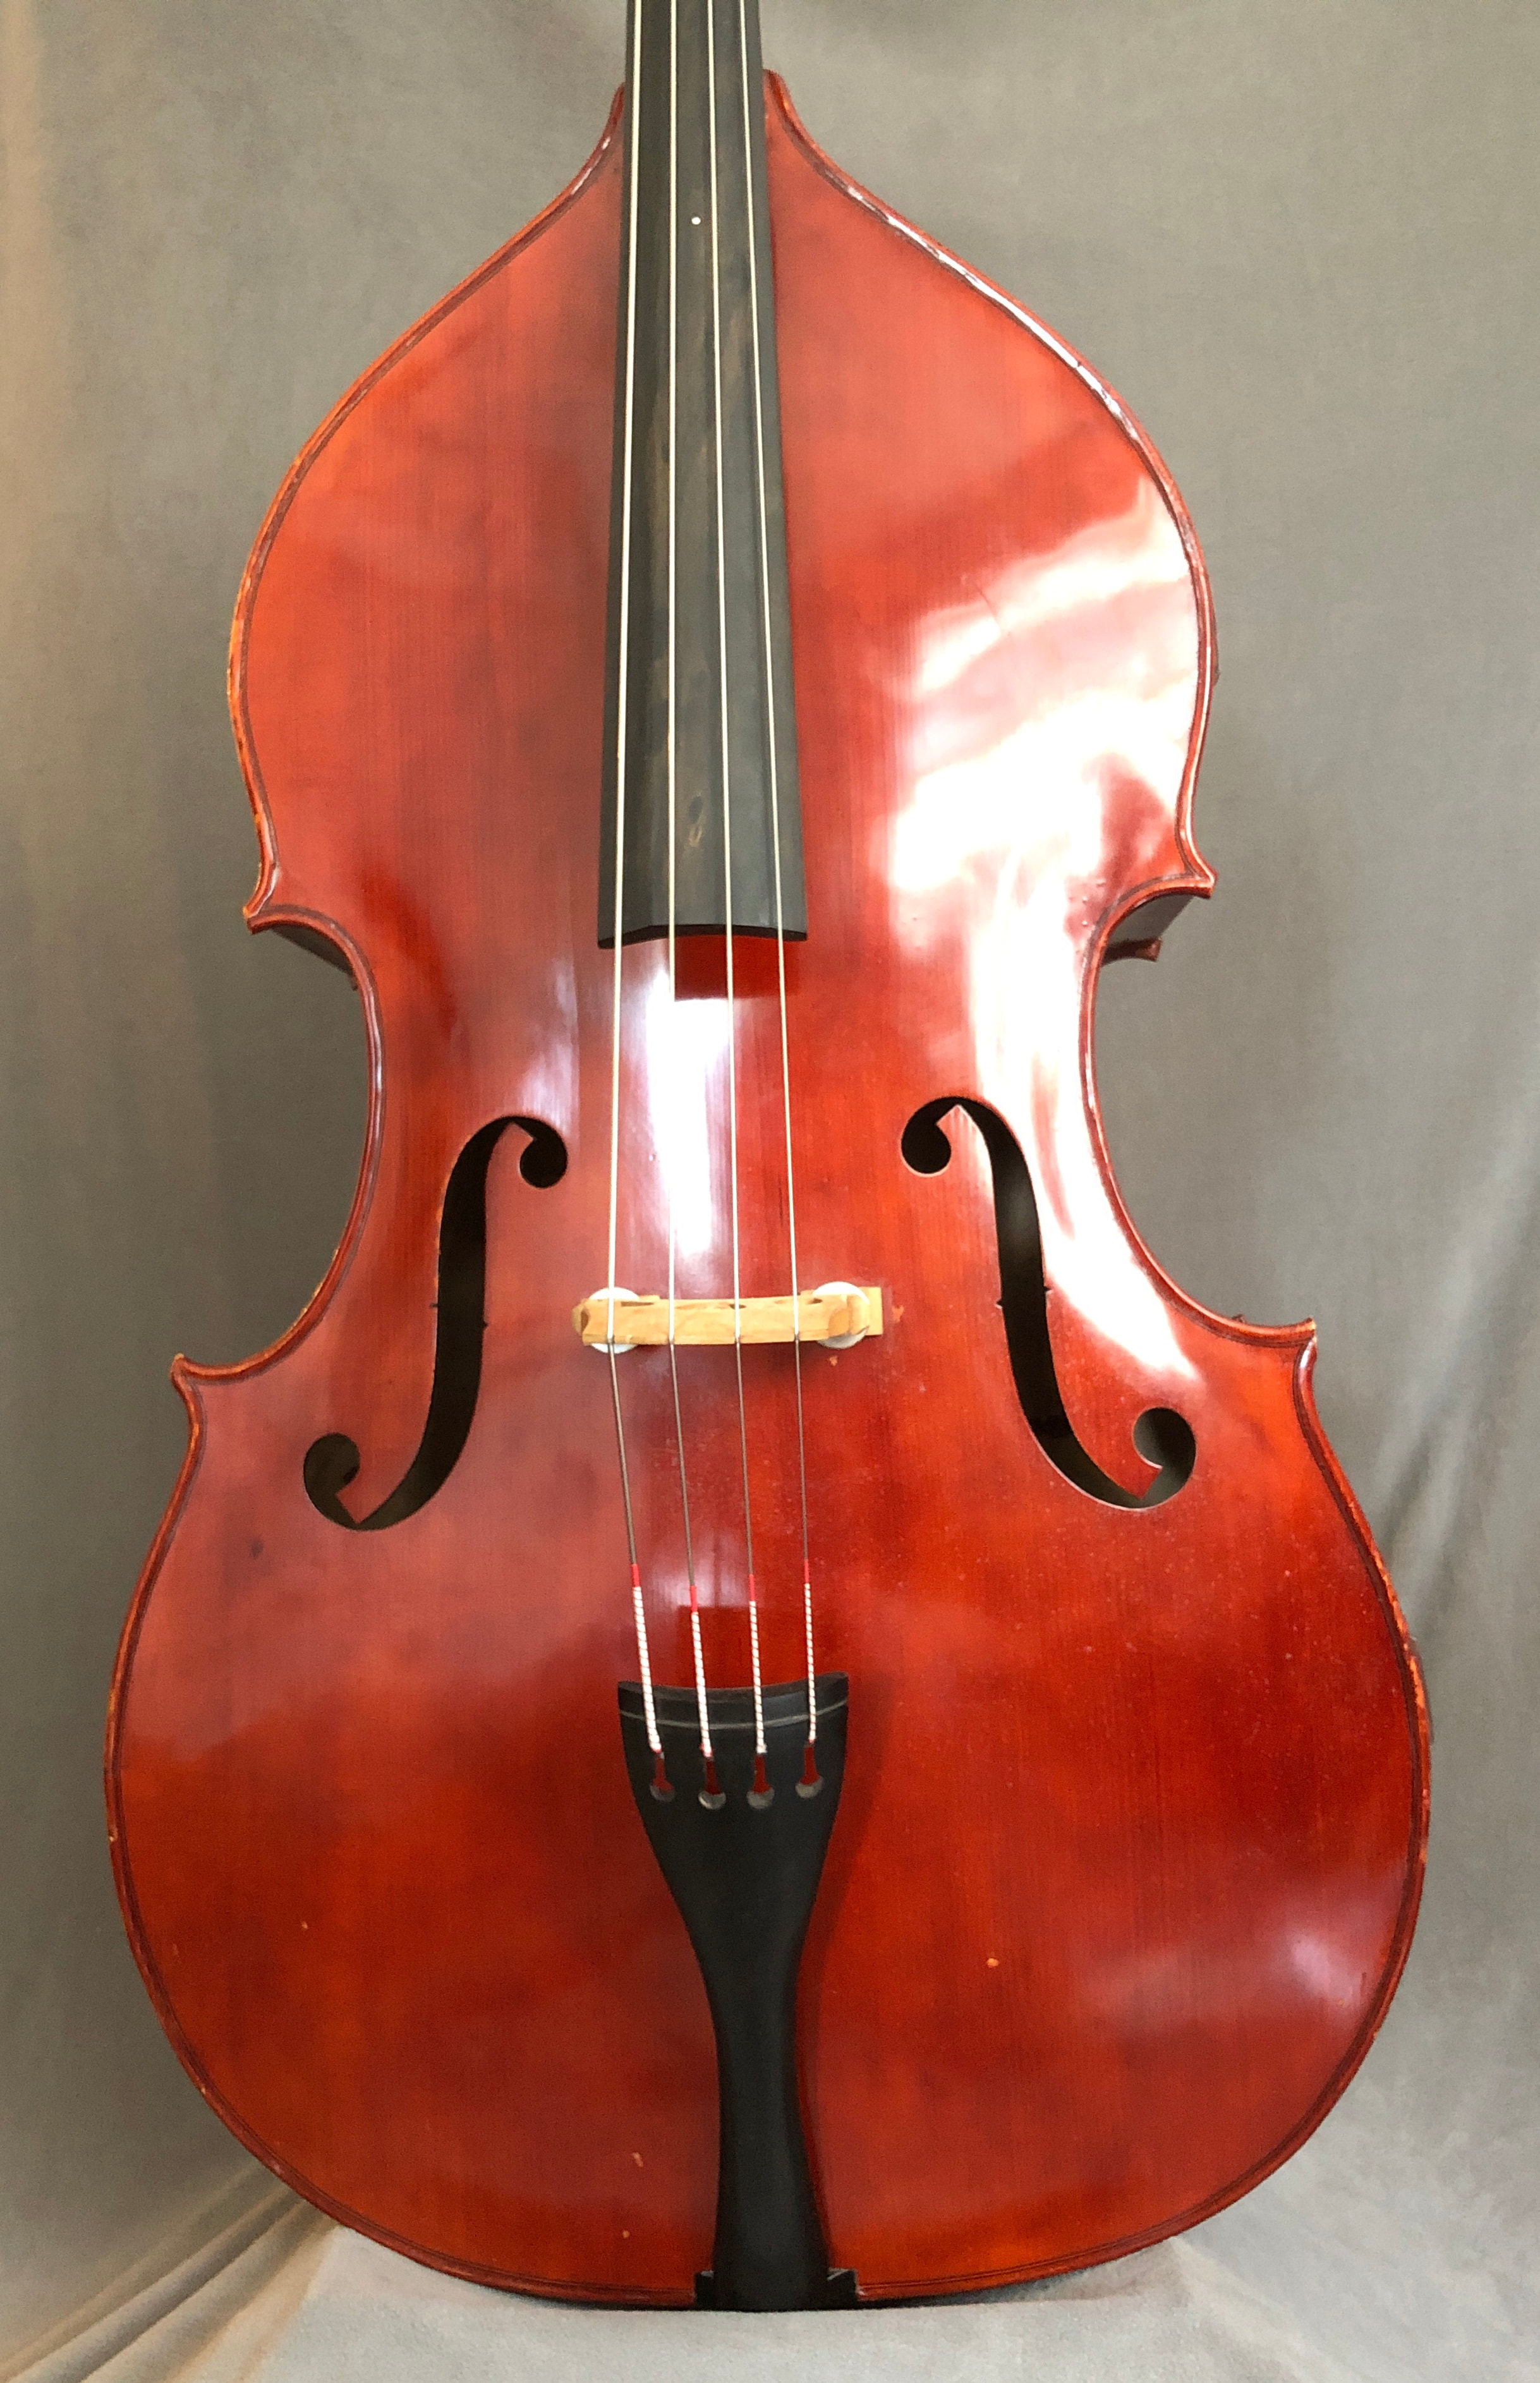 Pecard Carved Bass Violin Corners Sold